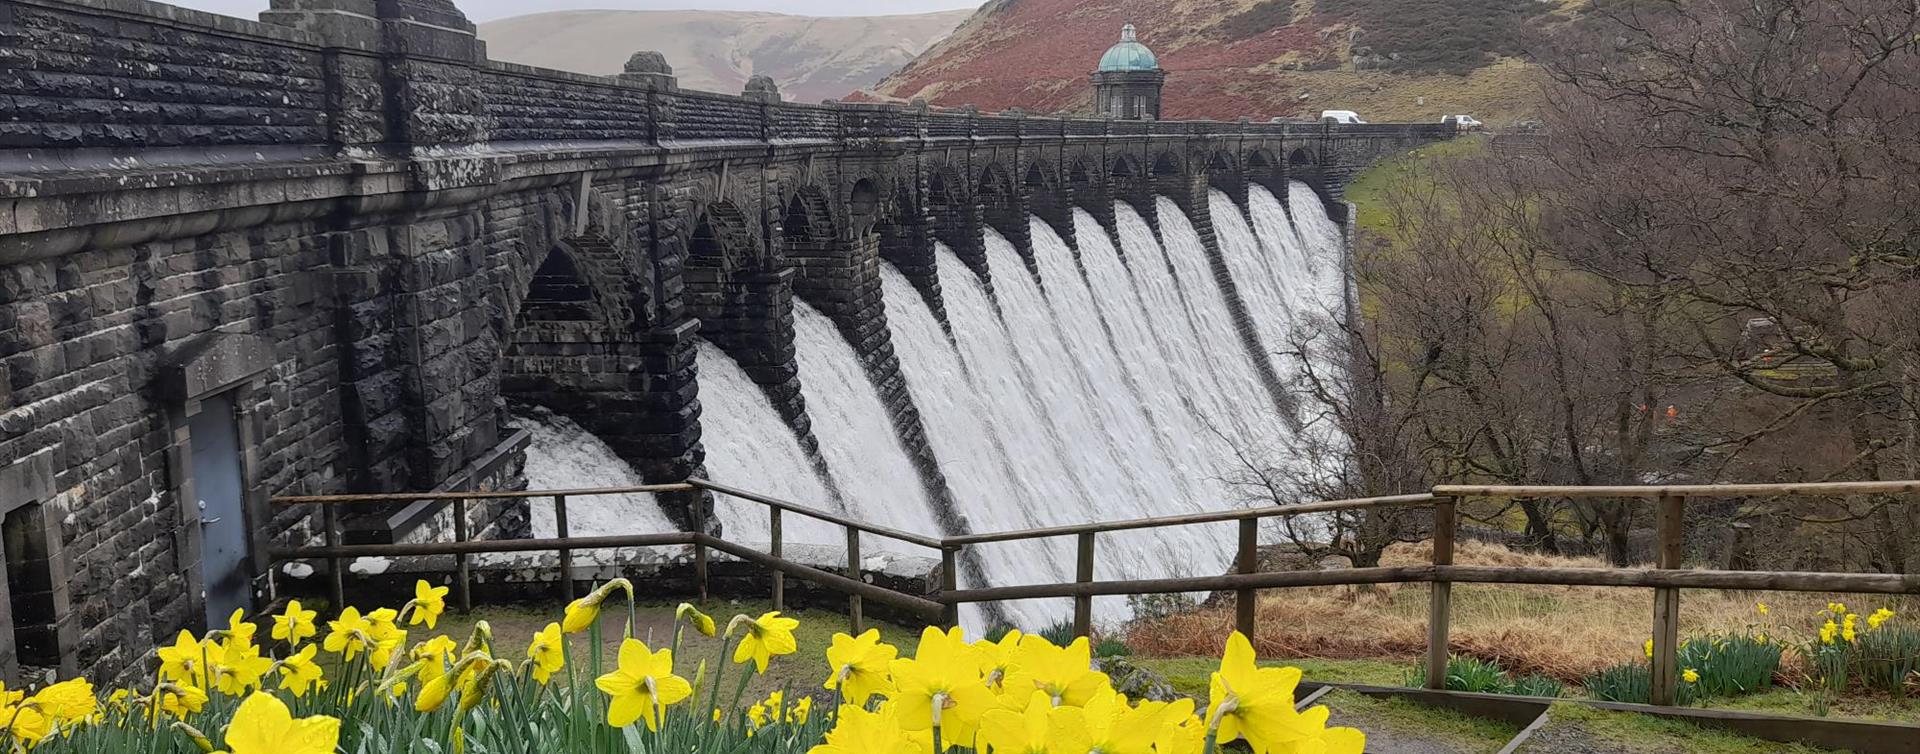 Mid Wales Elan Valley Dam in Spring